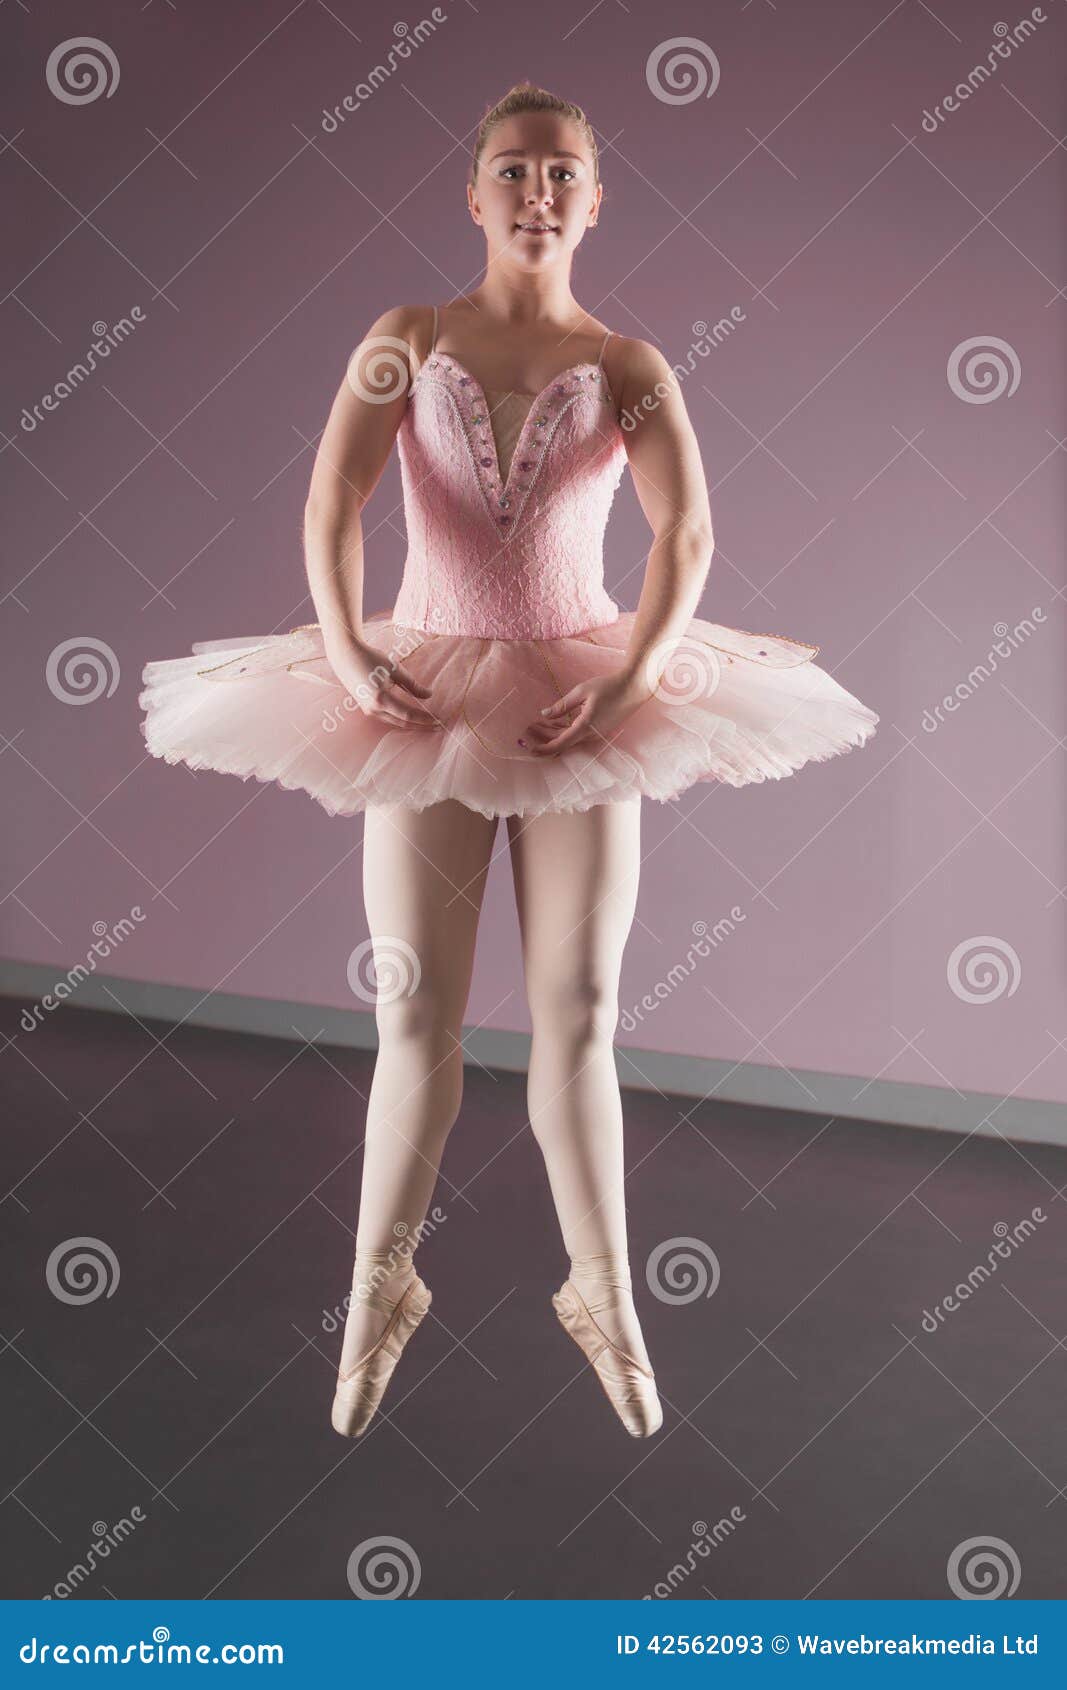 Грациозно 3. Фигура "балерина". Фигуры балерин в обычной жизни. Балерина в обычной жизни. Фигура как у балерины.